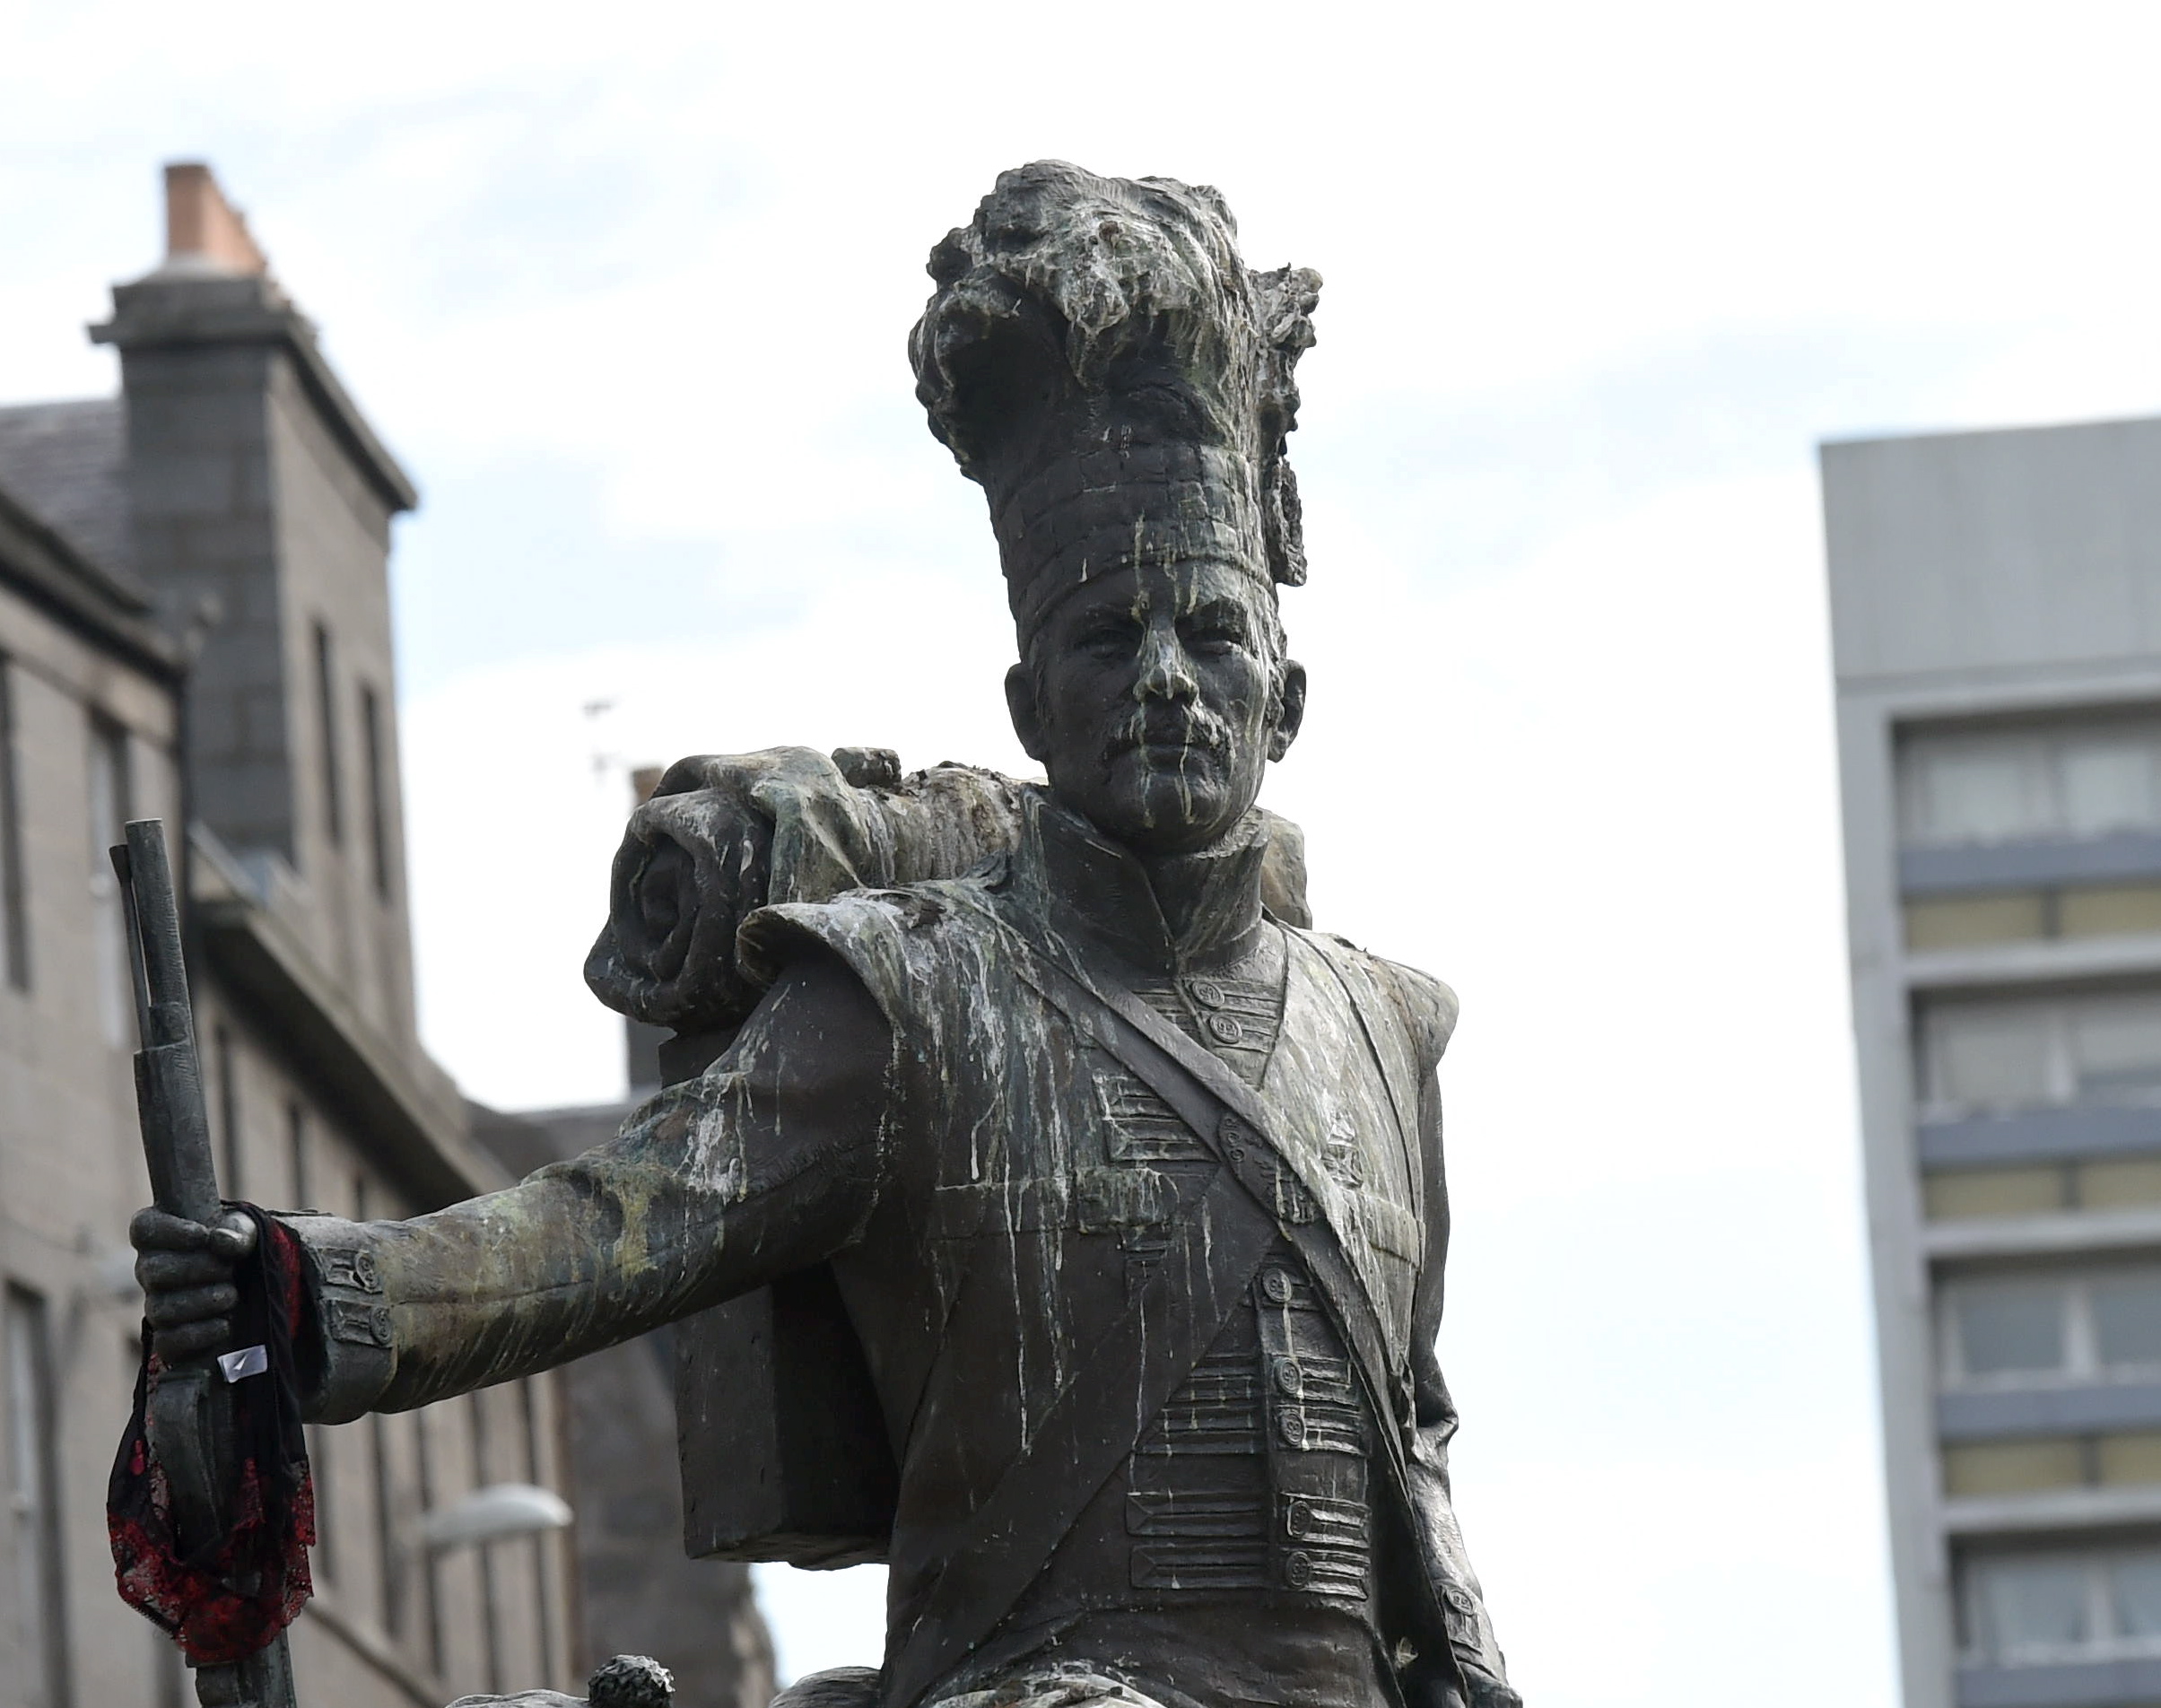 The Gordon Highlanders statue on the Castlegate.